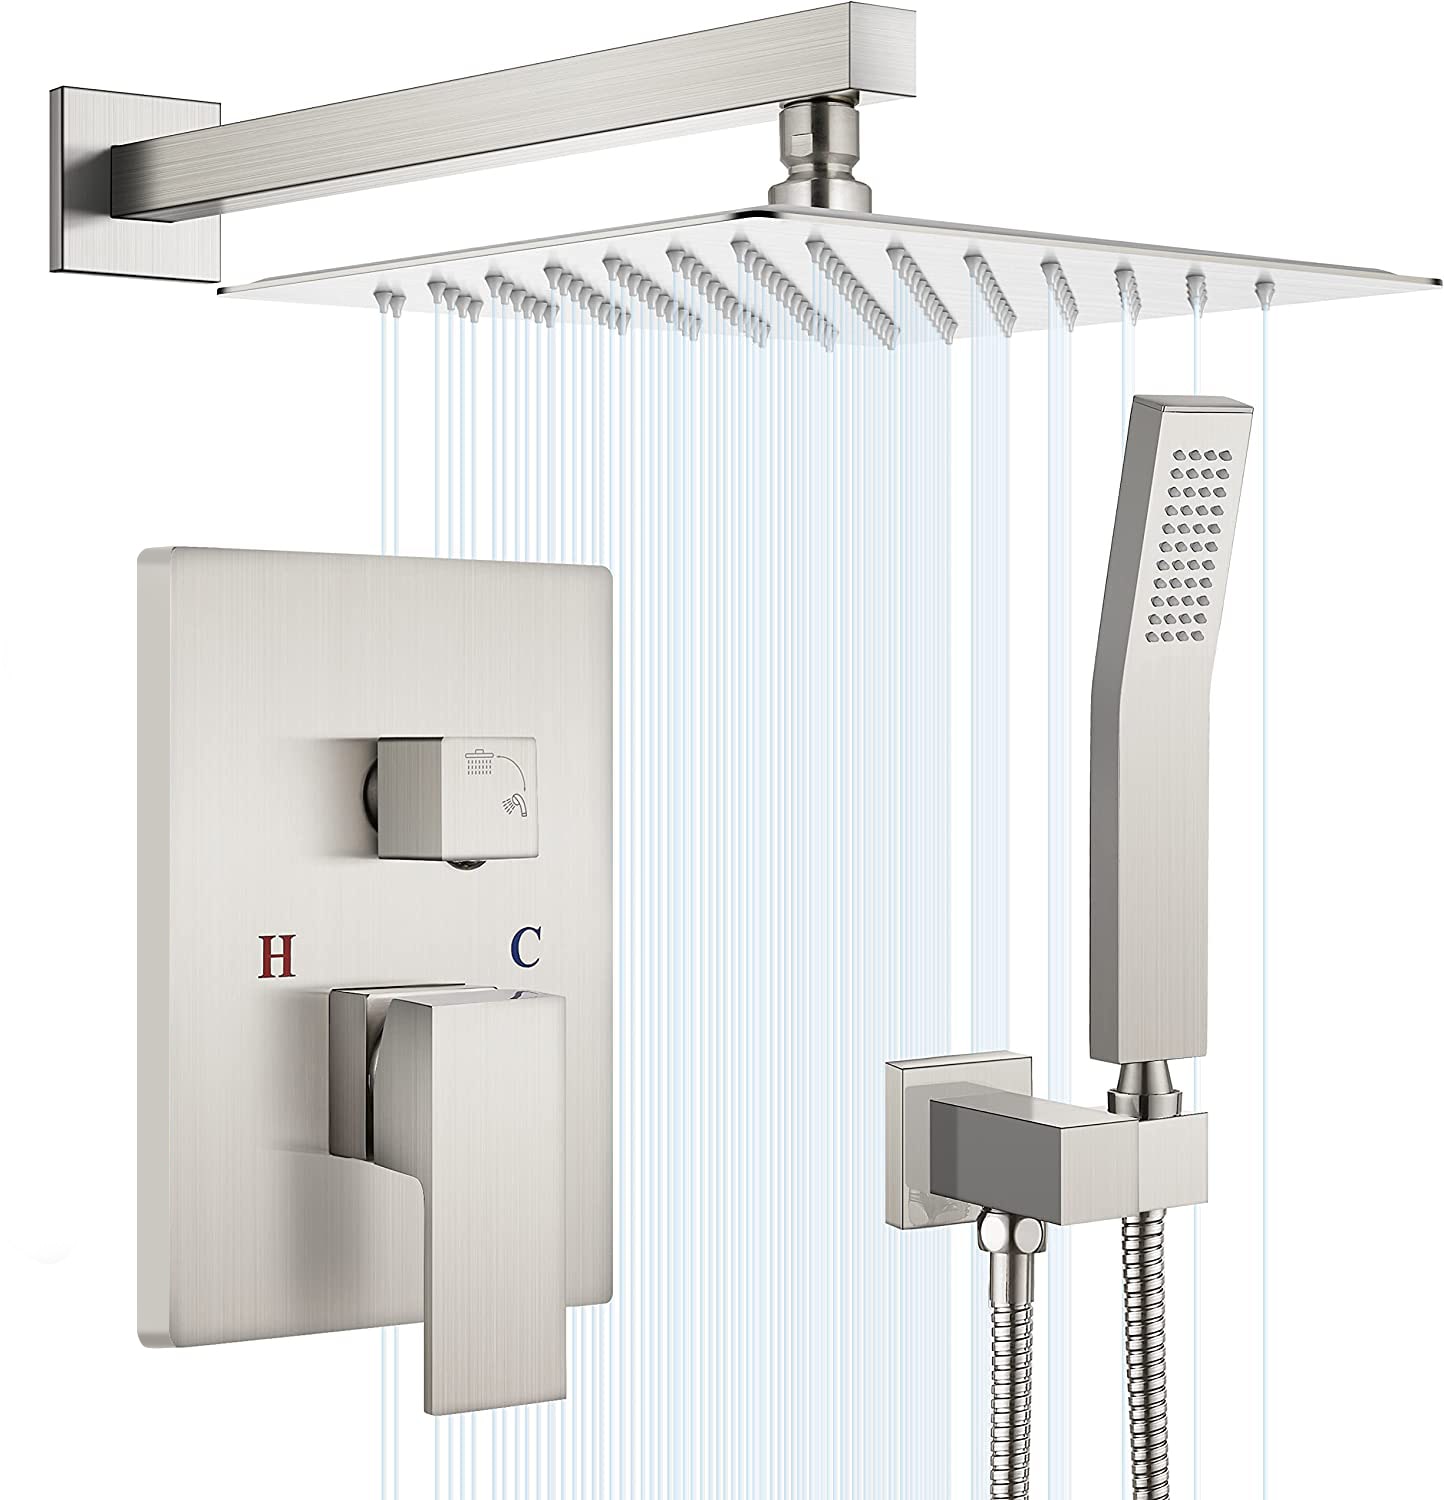 Bathroom Bath Shower Set Mixer Faucet Rotate Tub Spout Chrome Wall Mount 8  Rainfall Shower Head With Handshower 2 Ways Spout